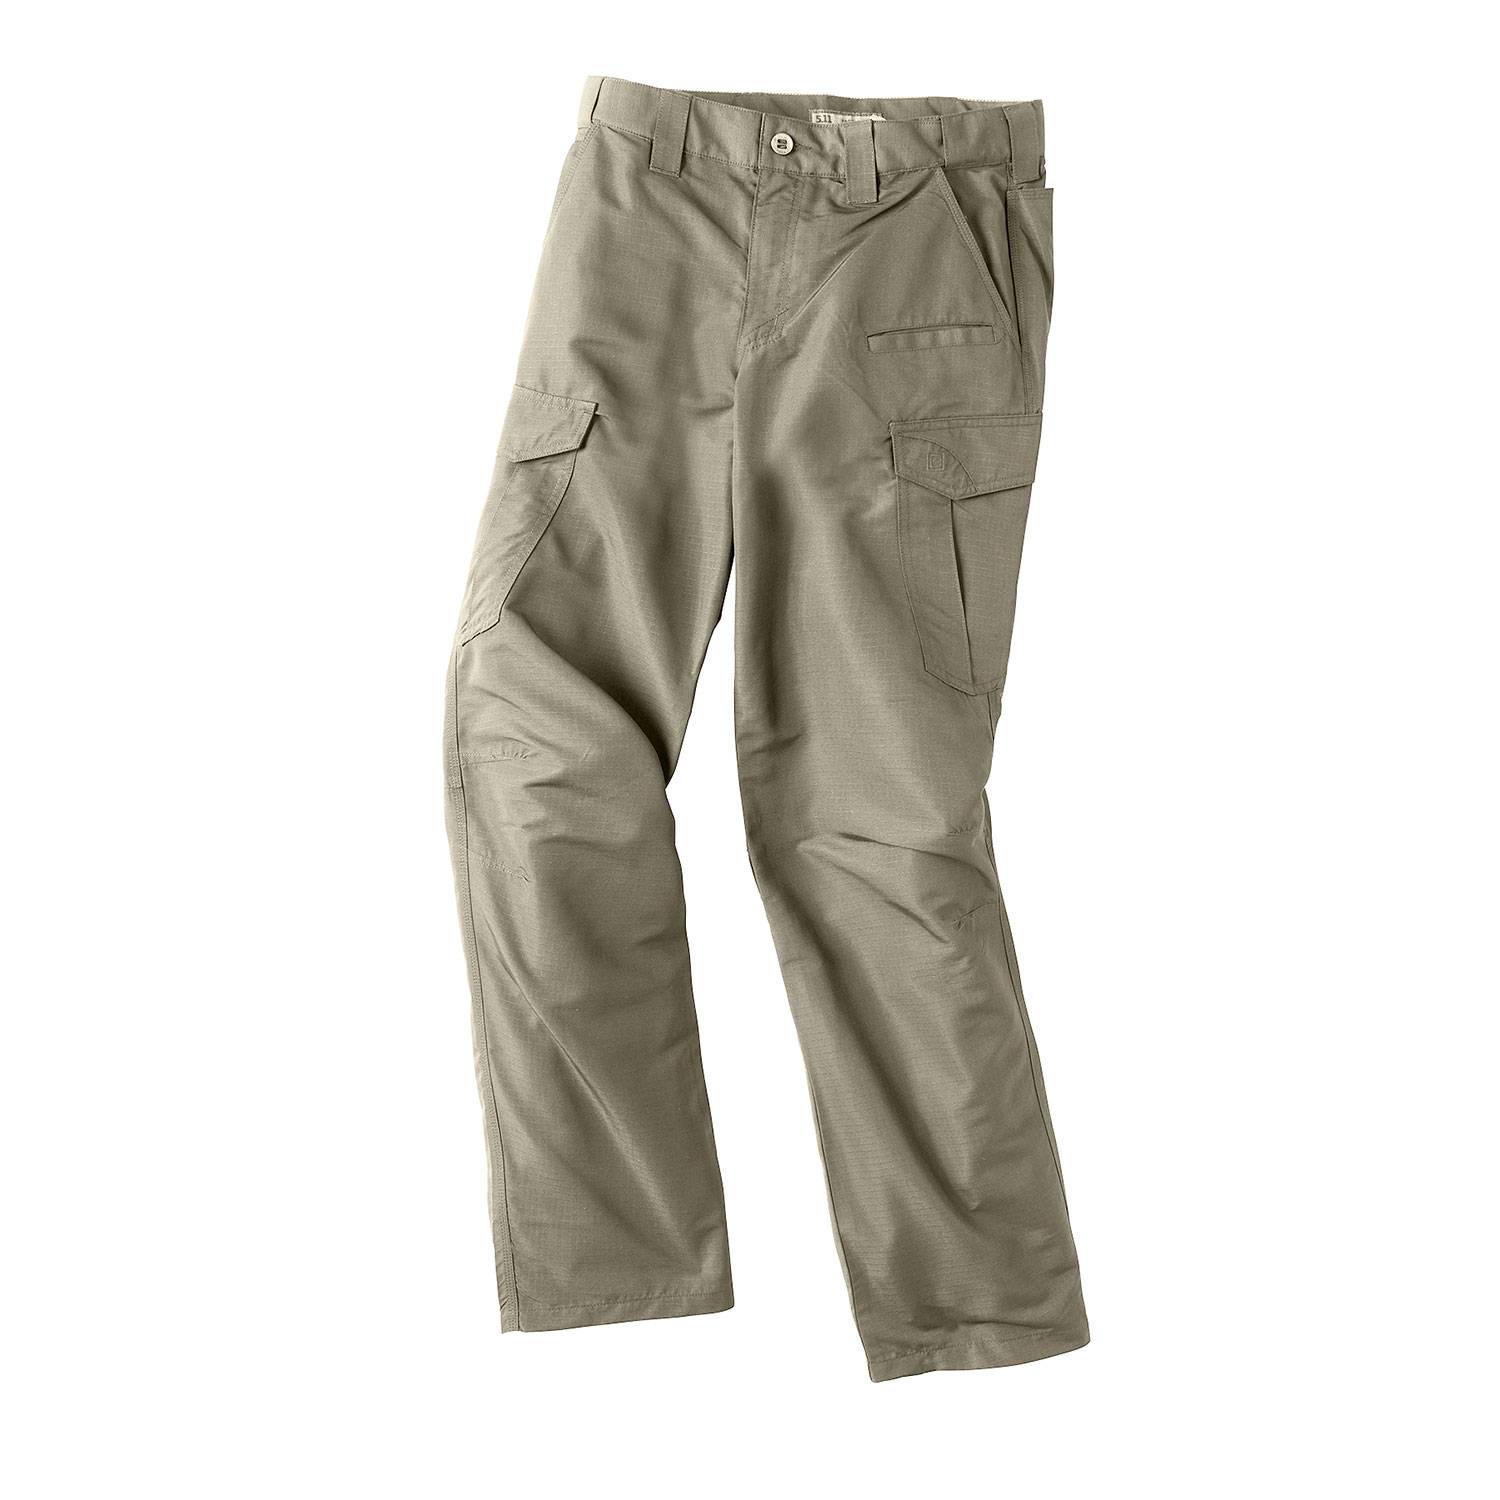 5.11 Womens Cargo Pants, Size 10, Khaki 64419